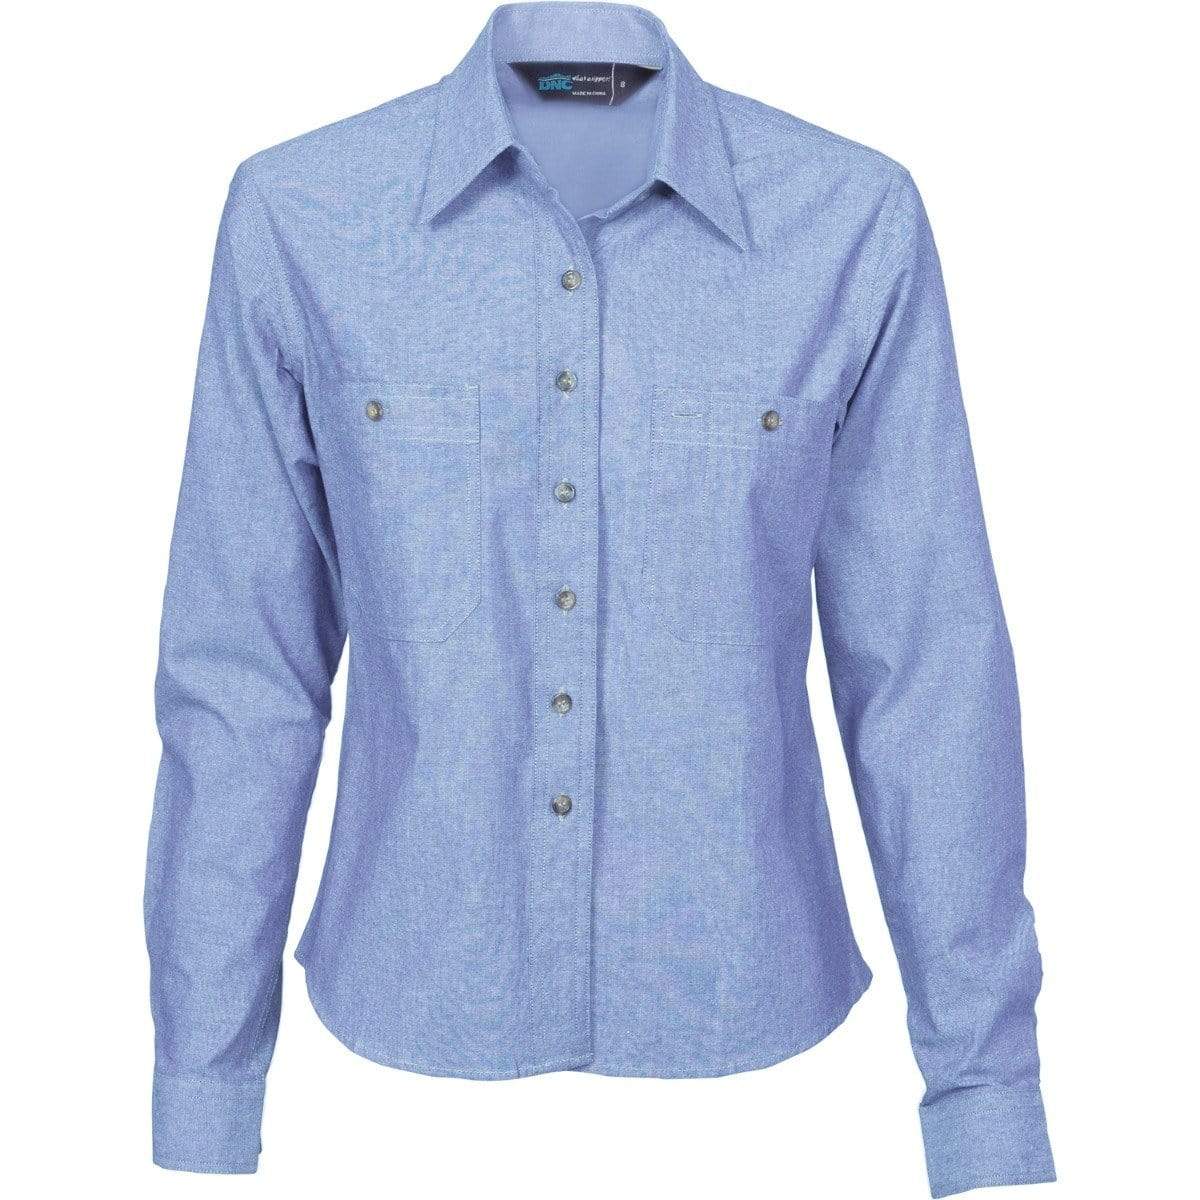 DNC Workwear Work Wear DNC WORKWEAR Women’s Cotton Chambray Shirt - Long Sleeve 4106